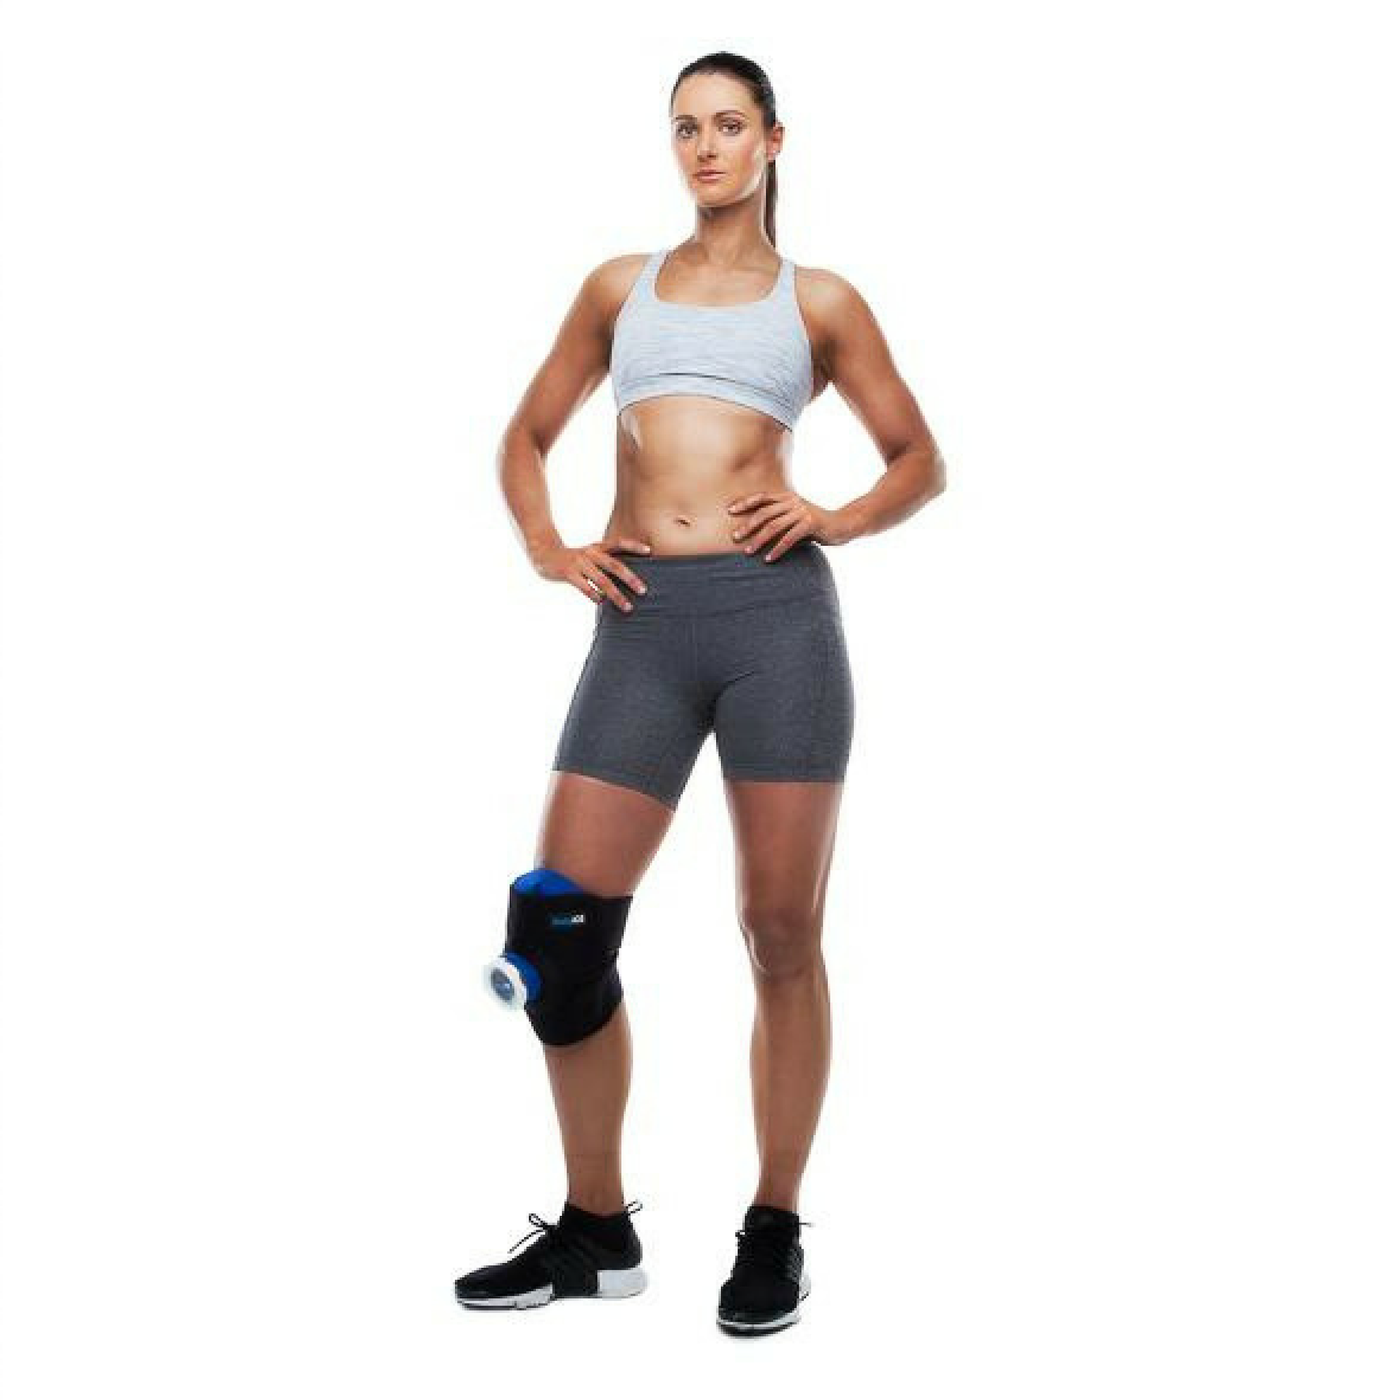 BodyICE Medium Recovery Set product -female used on knee